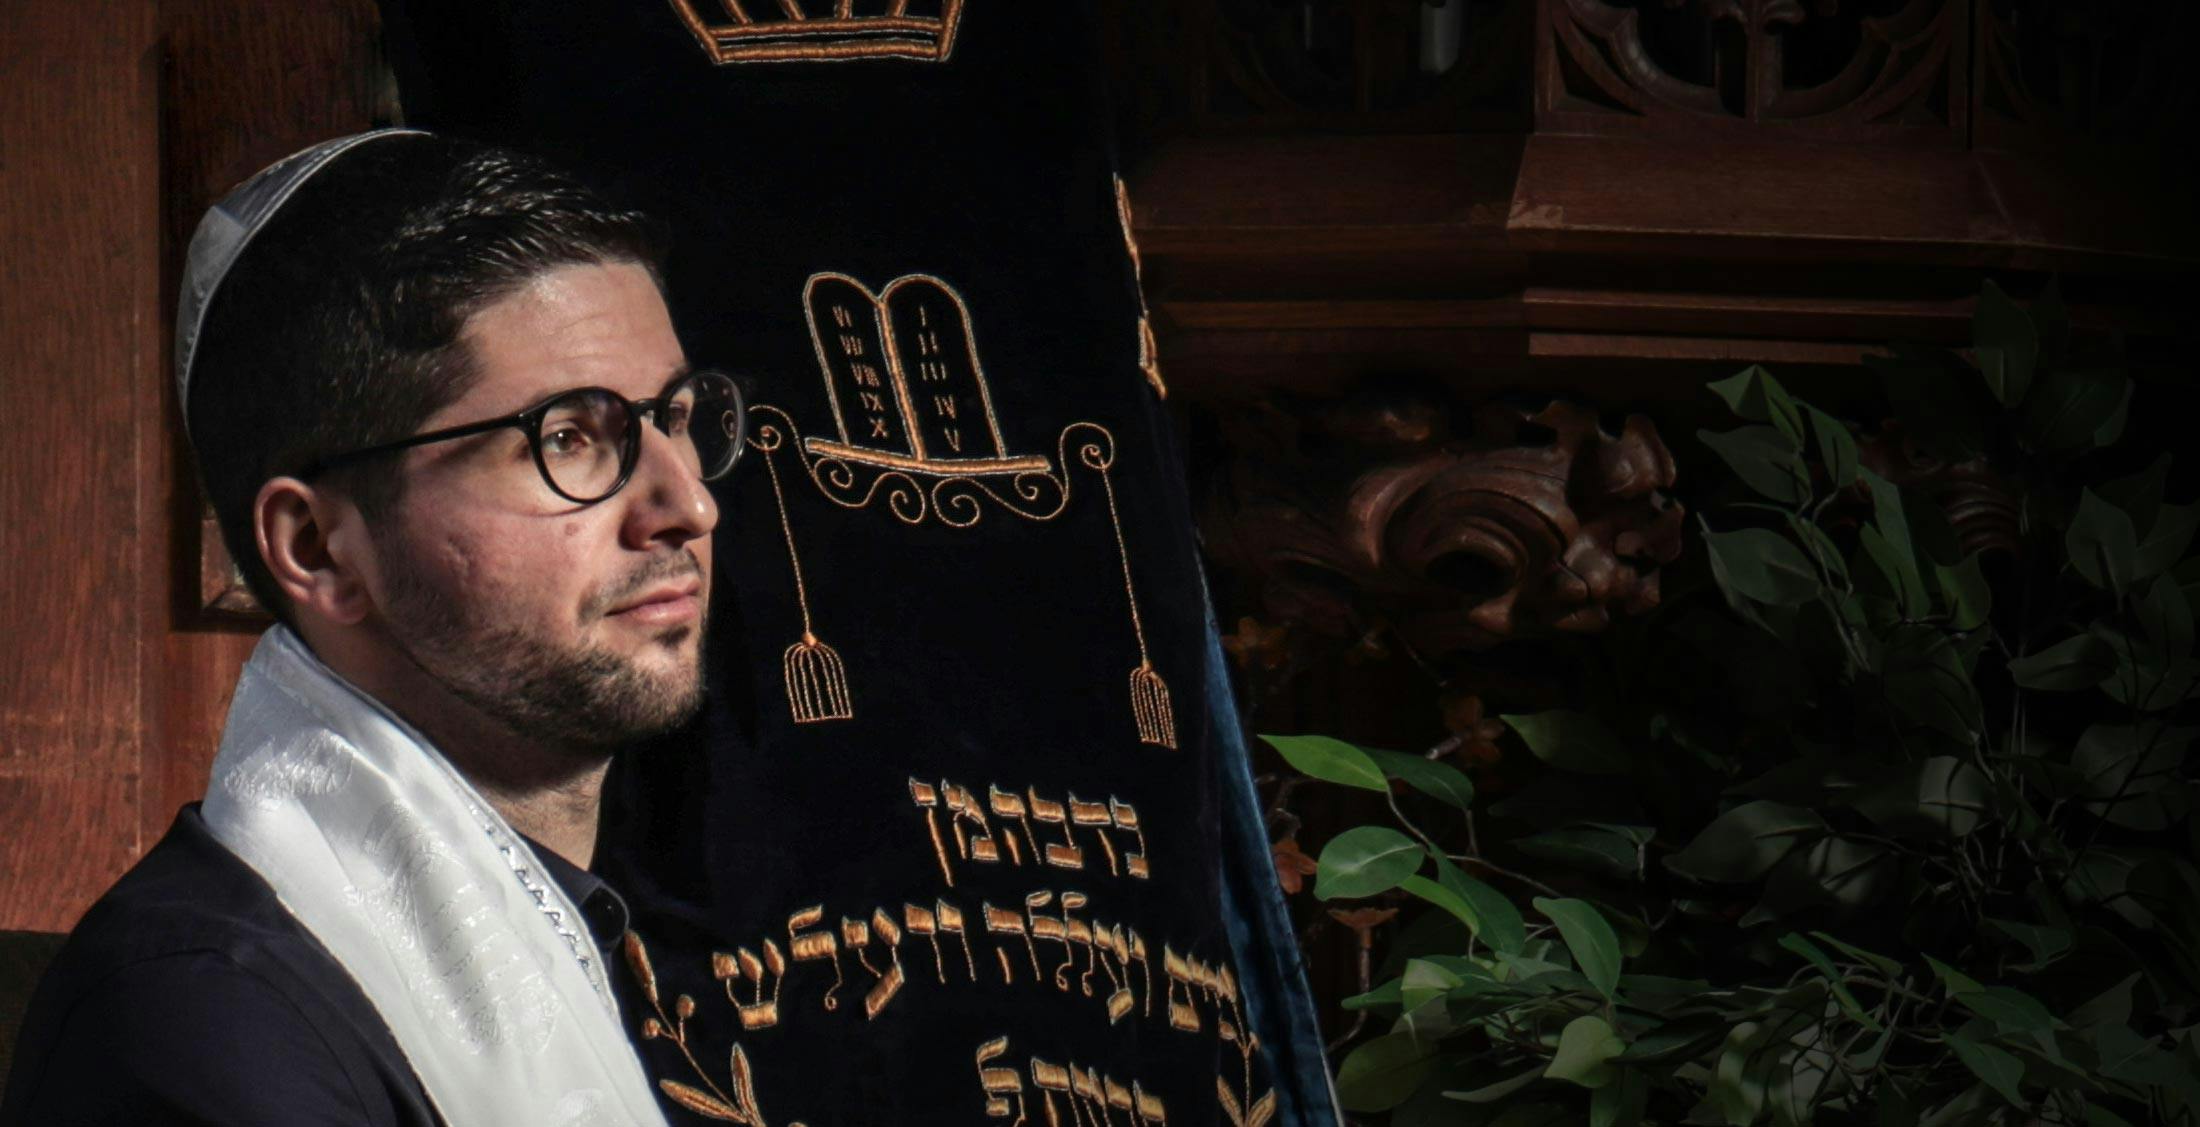 Jewish man in synagogue service.